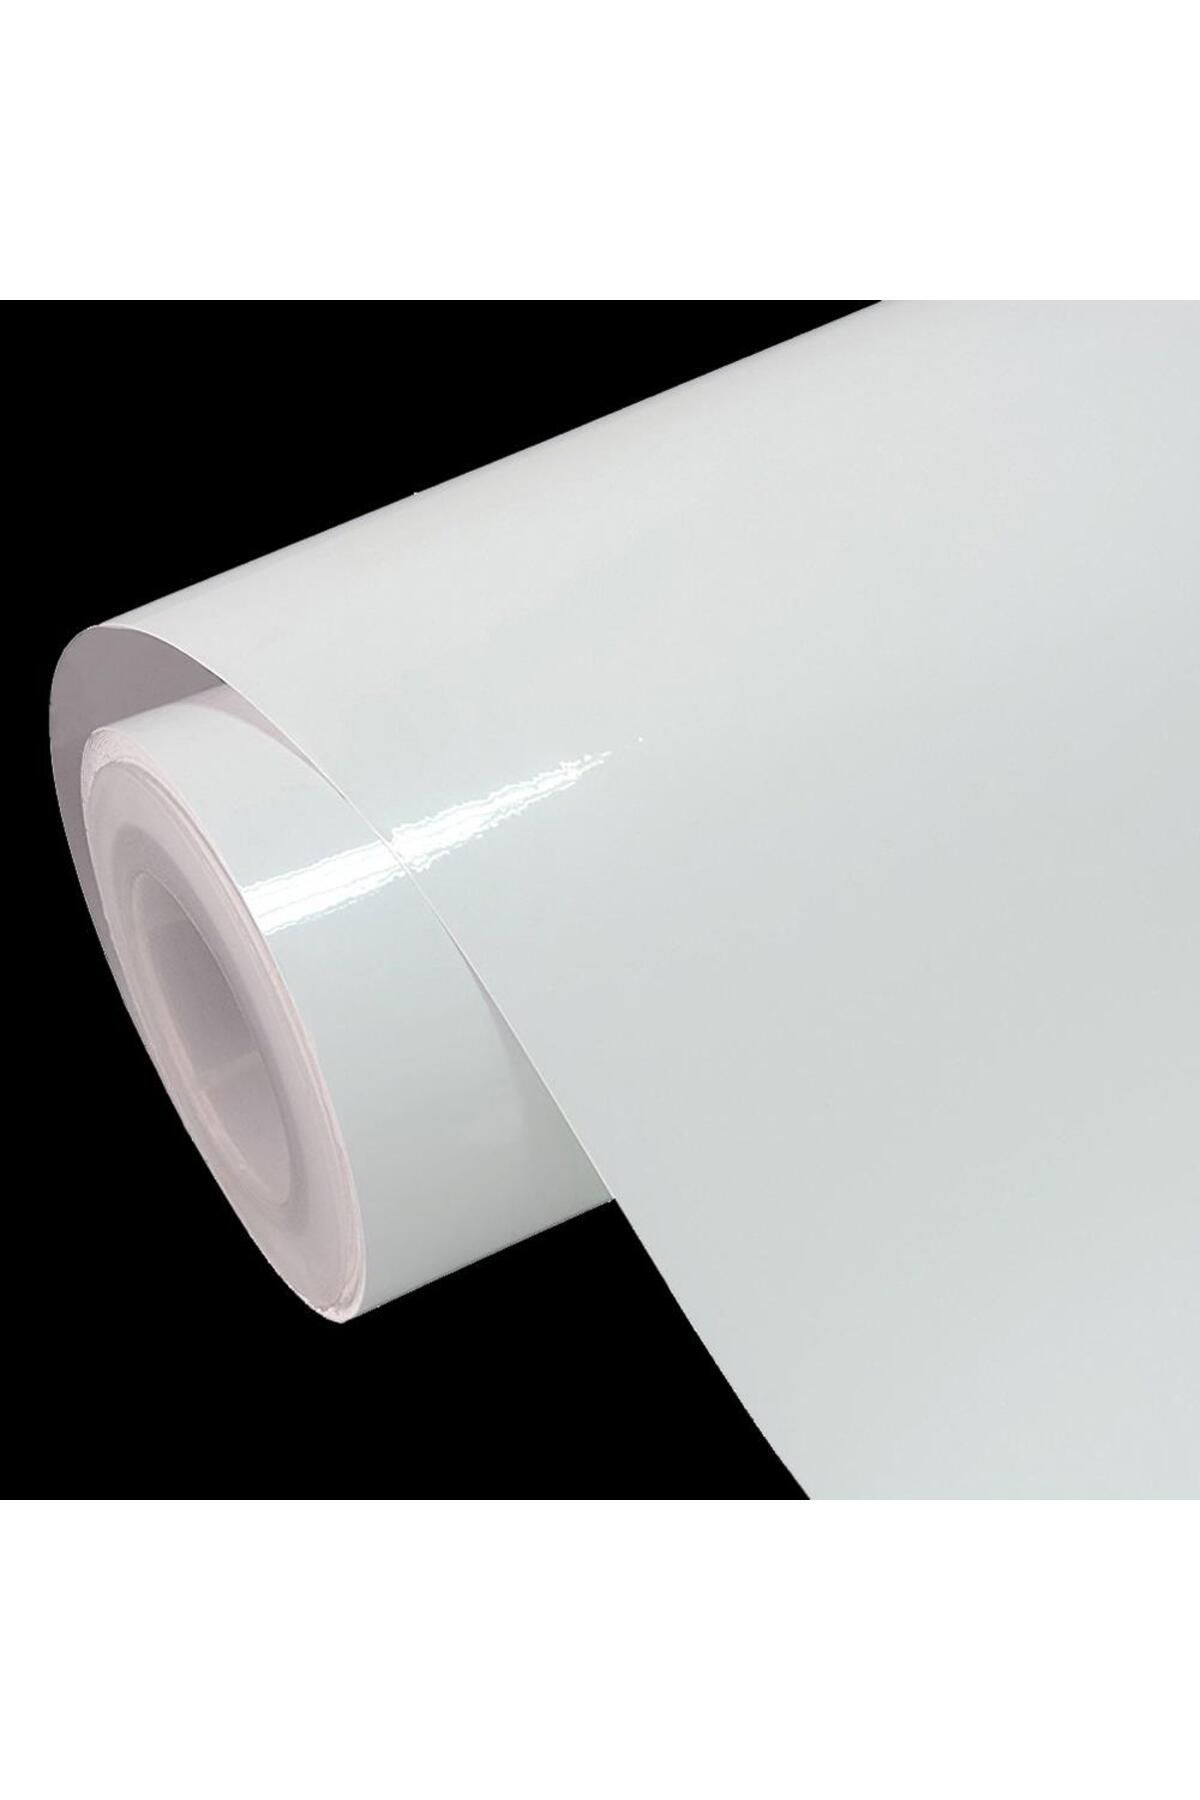 NewVario Parlak Beyaz Folyo - Dolap Kaplama Folyosu 60 Cm X 6 Metre